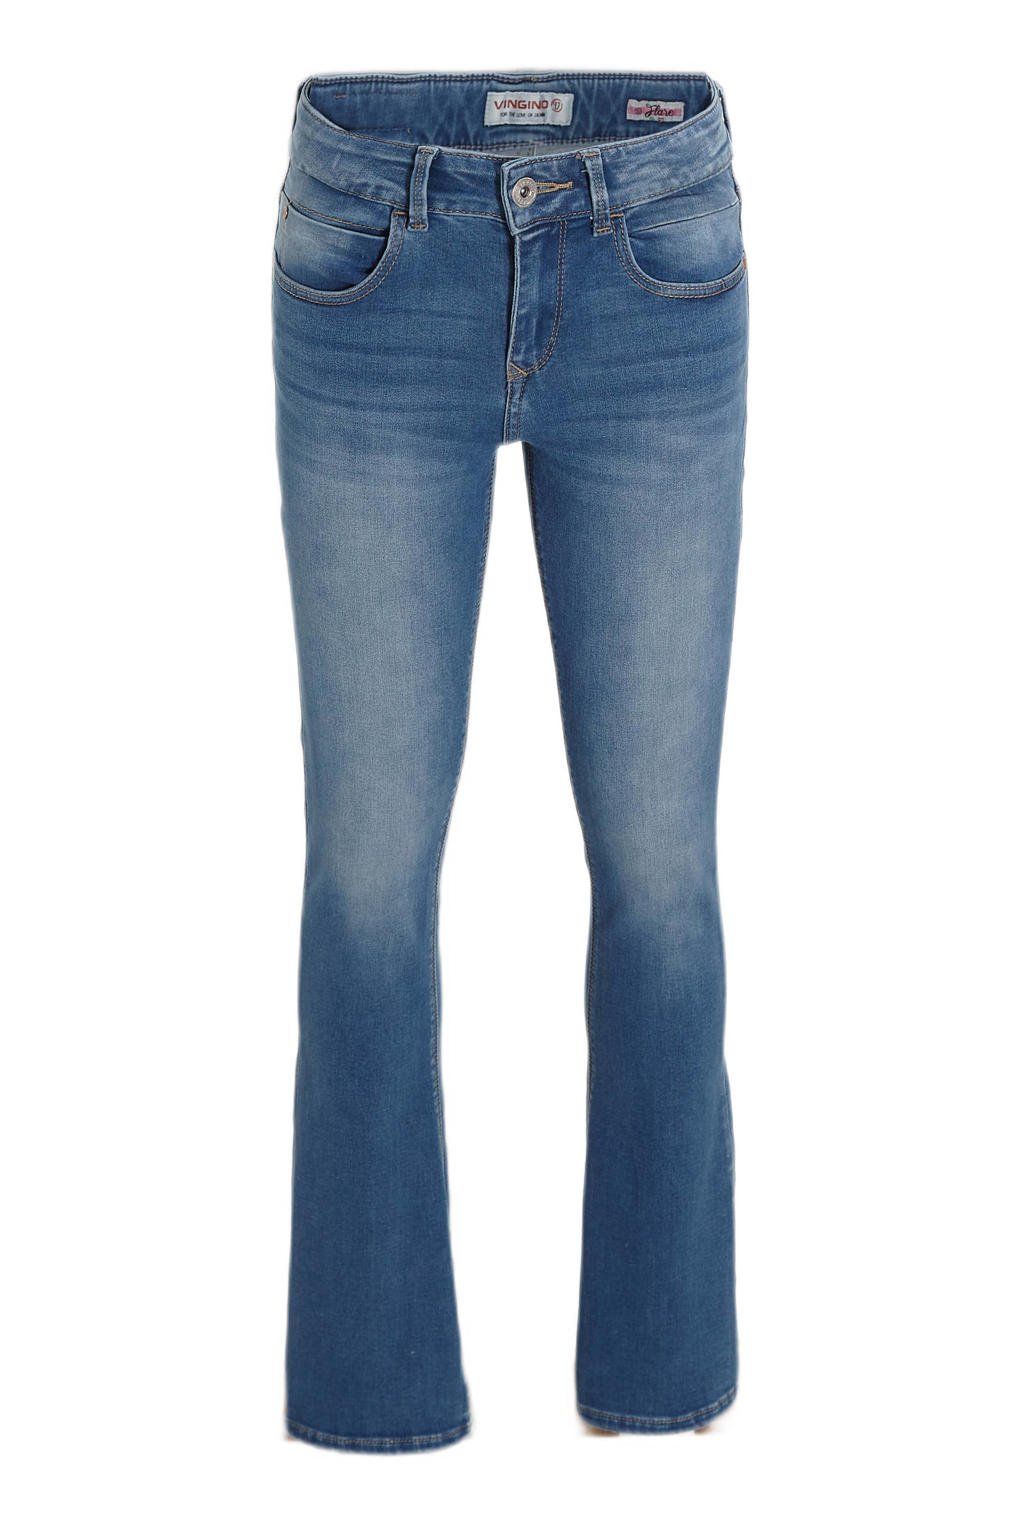 Medium blue denim meisjes Vingino flared jeans Briona van katoen met regular waist en rits- en knoopsluiting